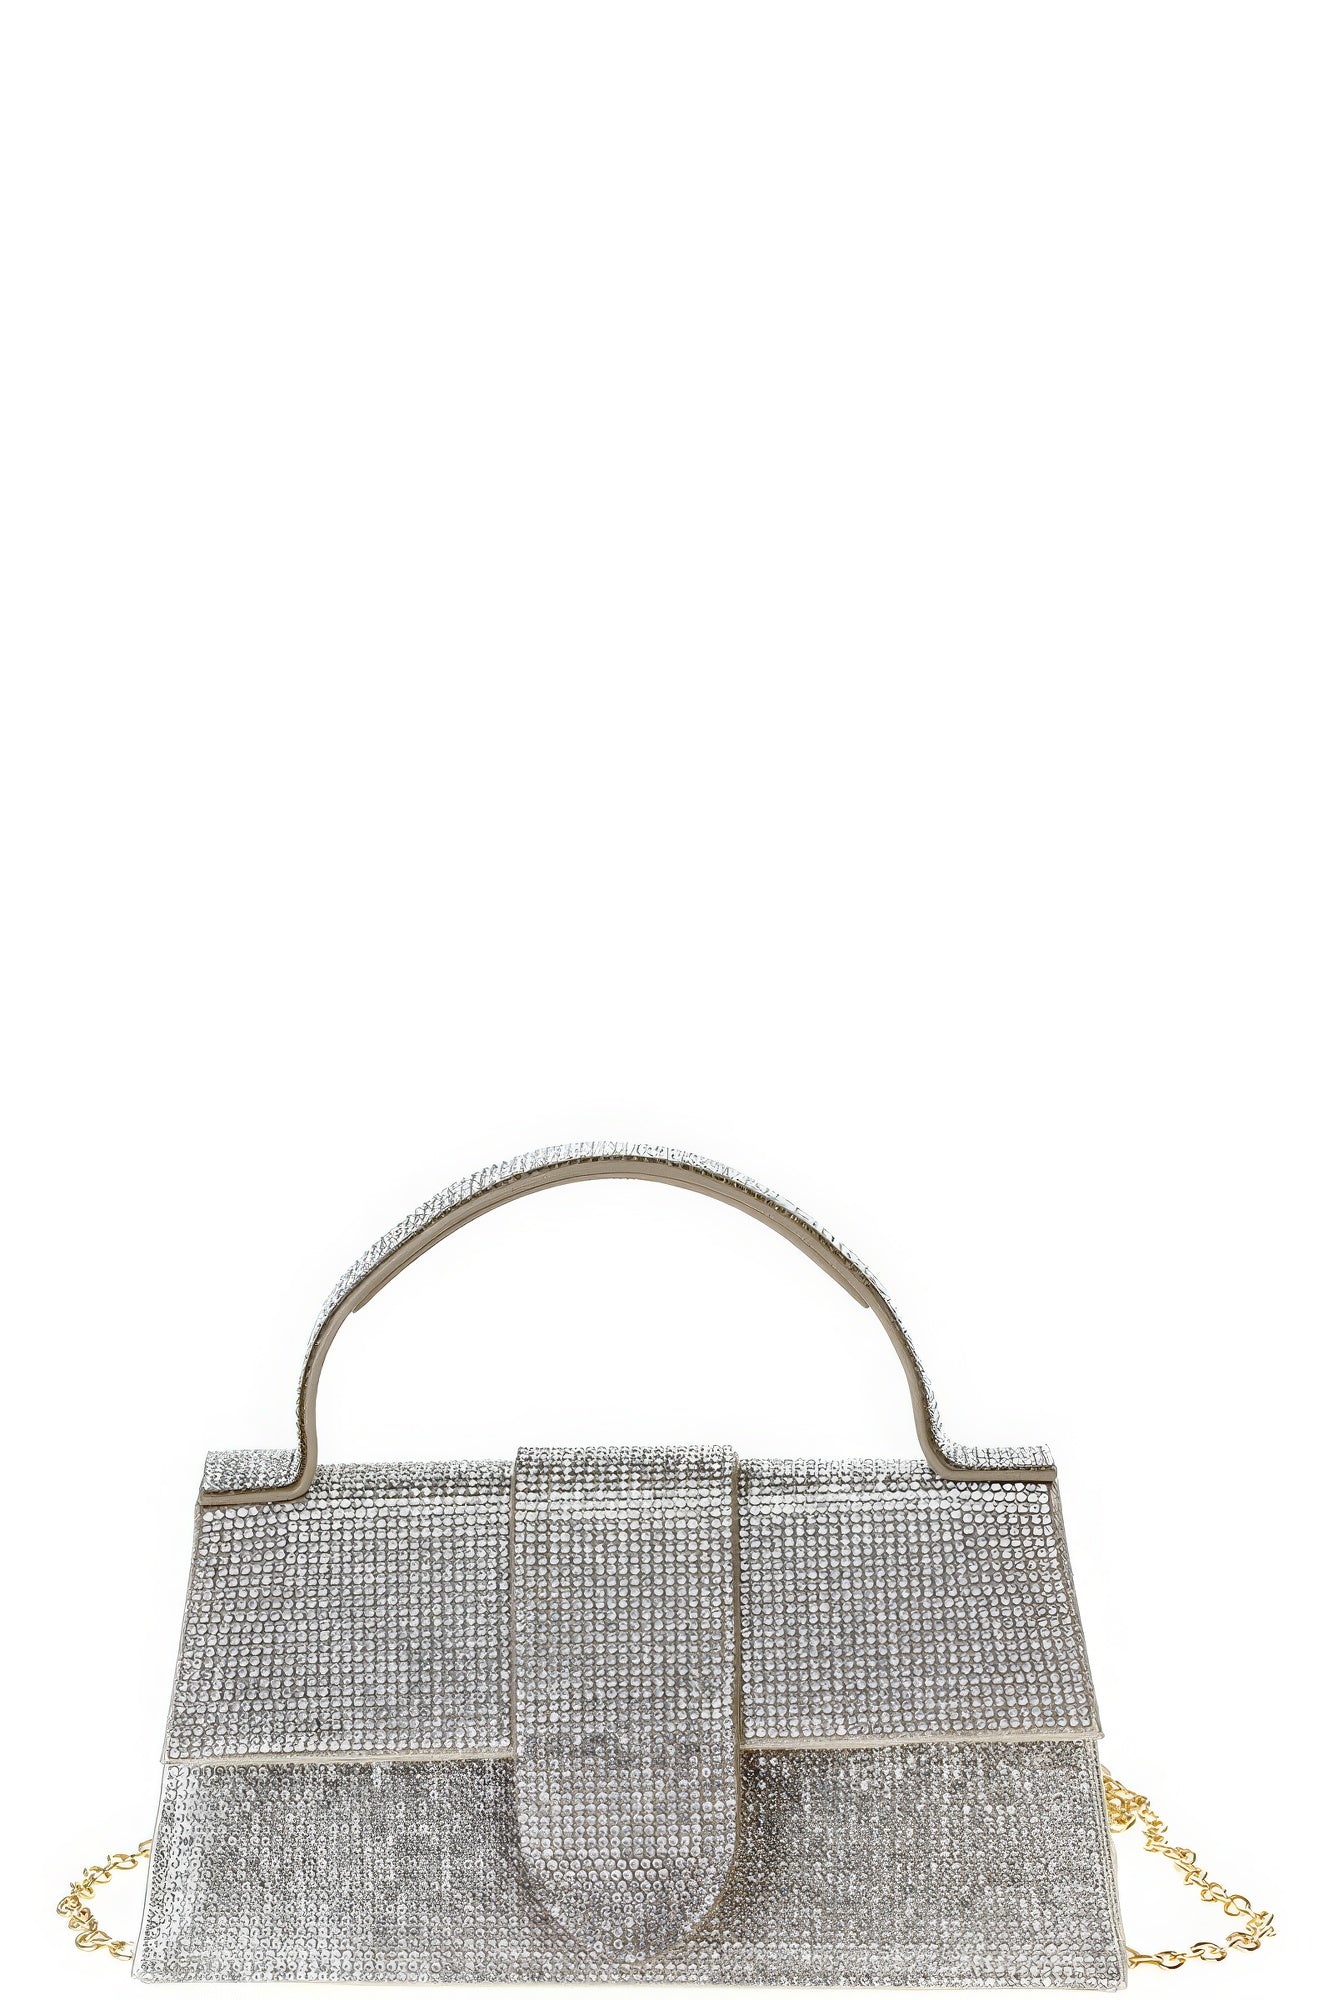 THE GRACE Rhinestone Allover Chic Design Handle Bag